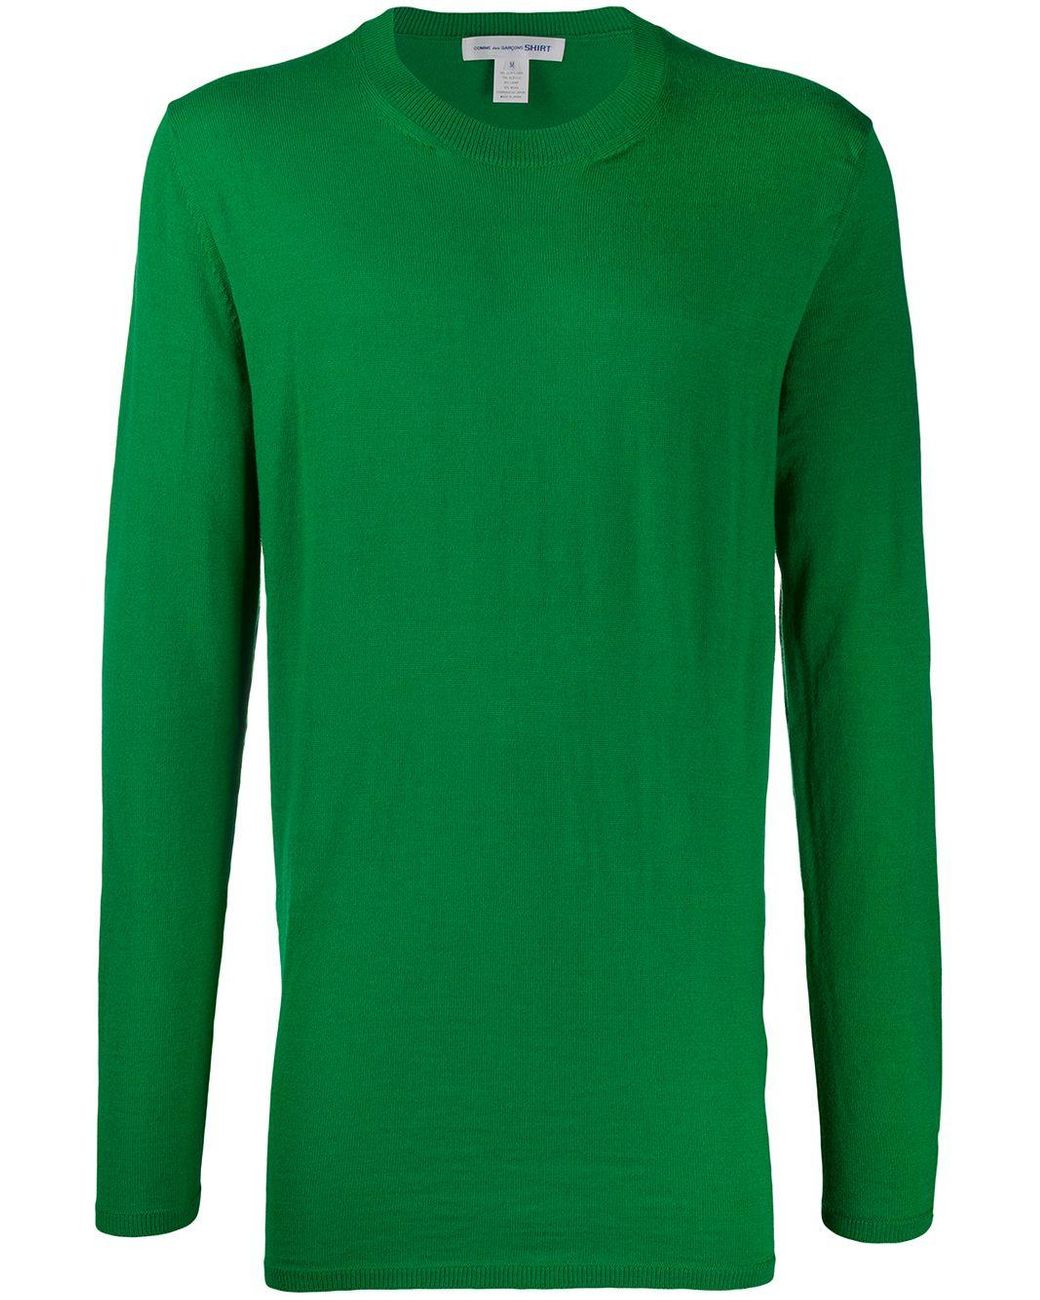 Comme des Garçons Wool Long Sweatshirt in Green for Men - Lyst